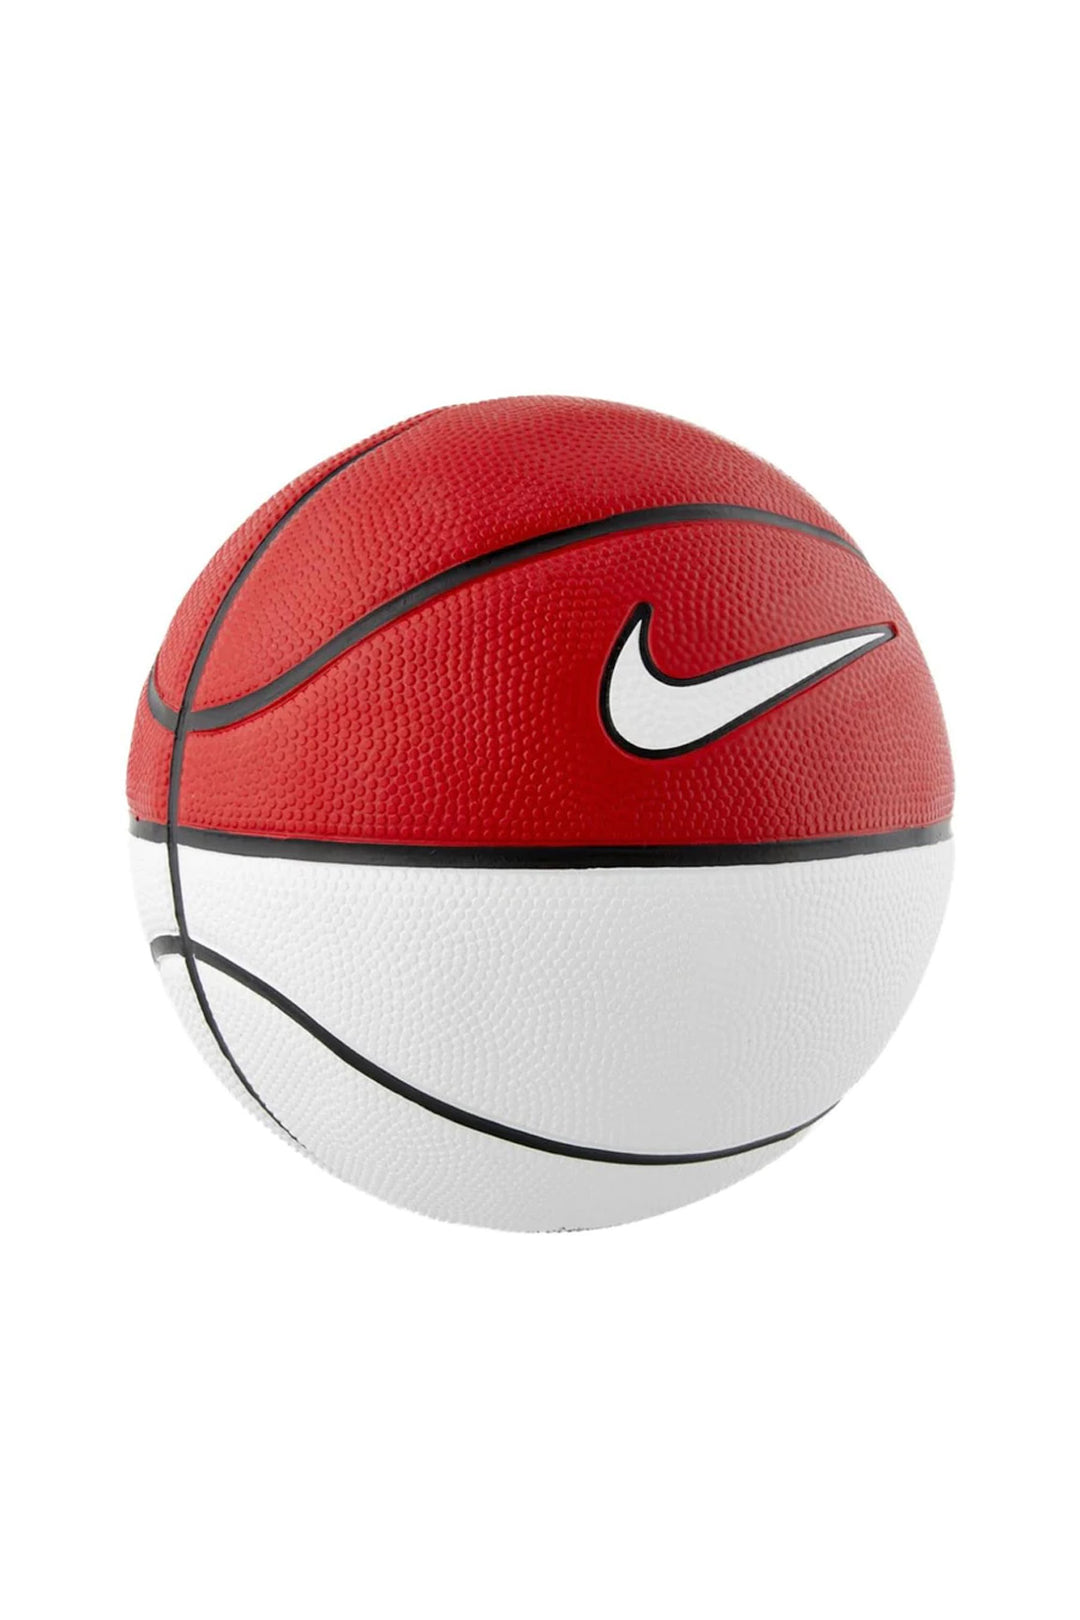 Nike Skills Gym Size 3 Basketball - Red/White